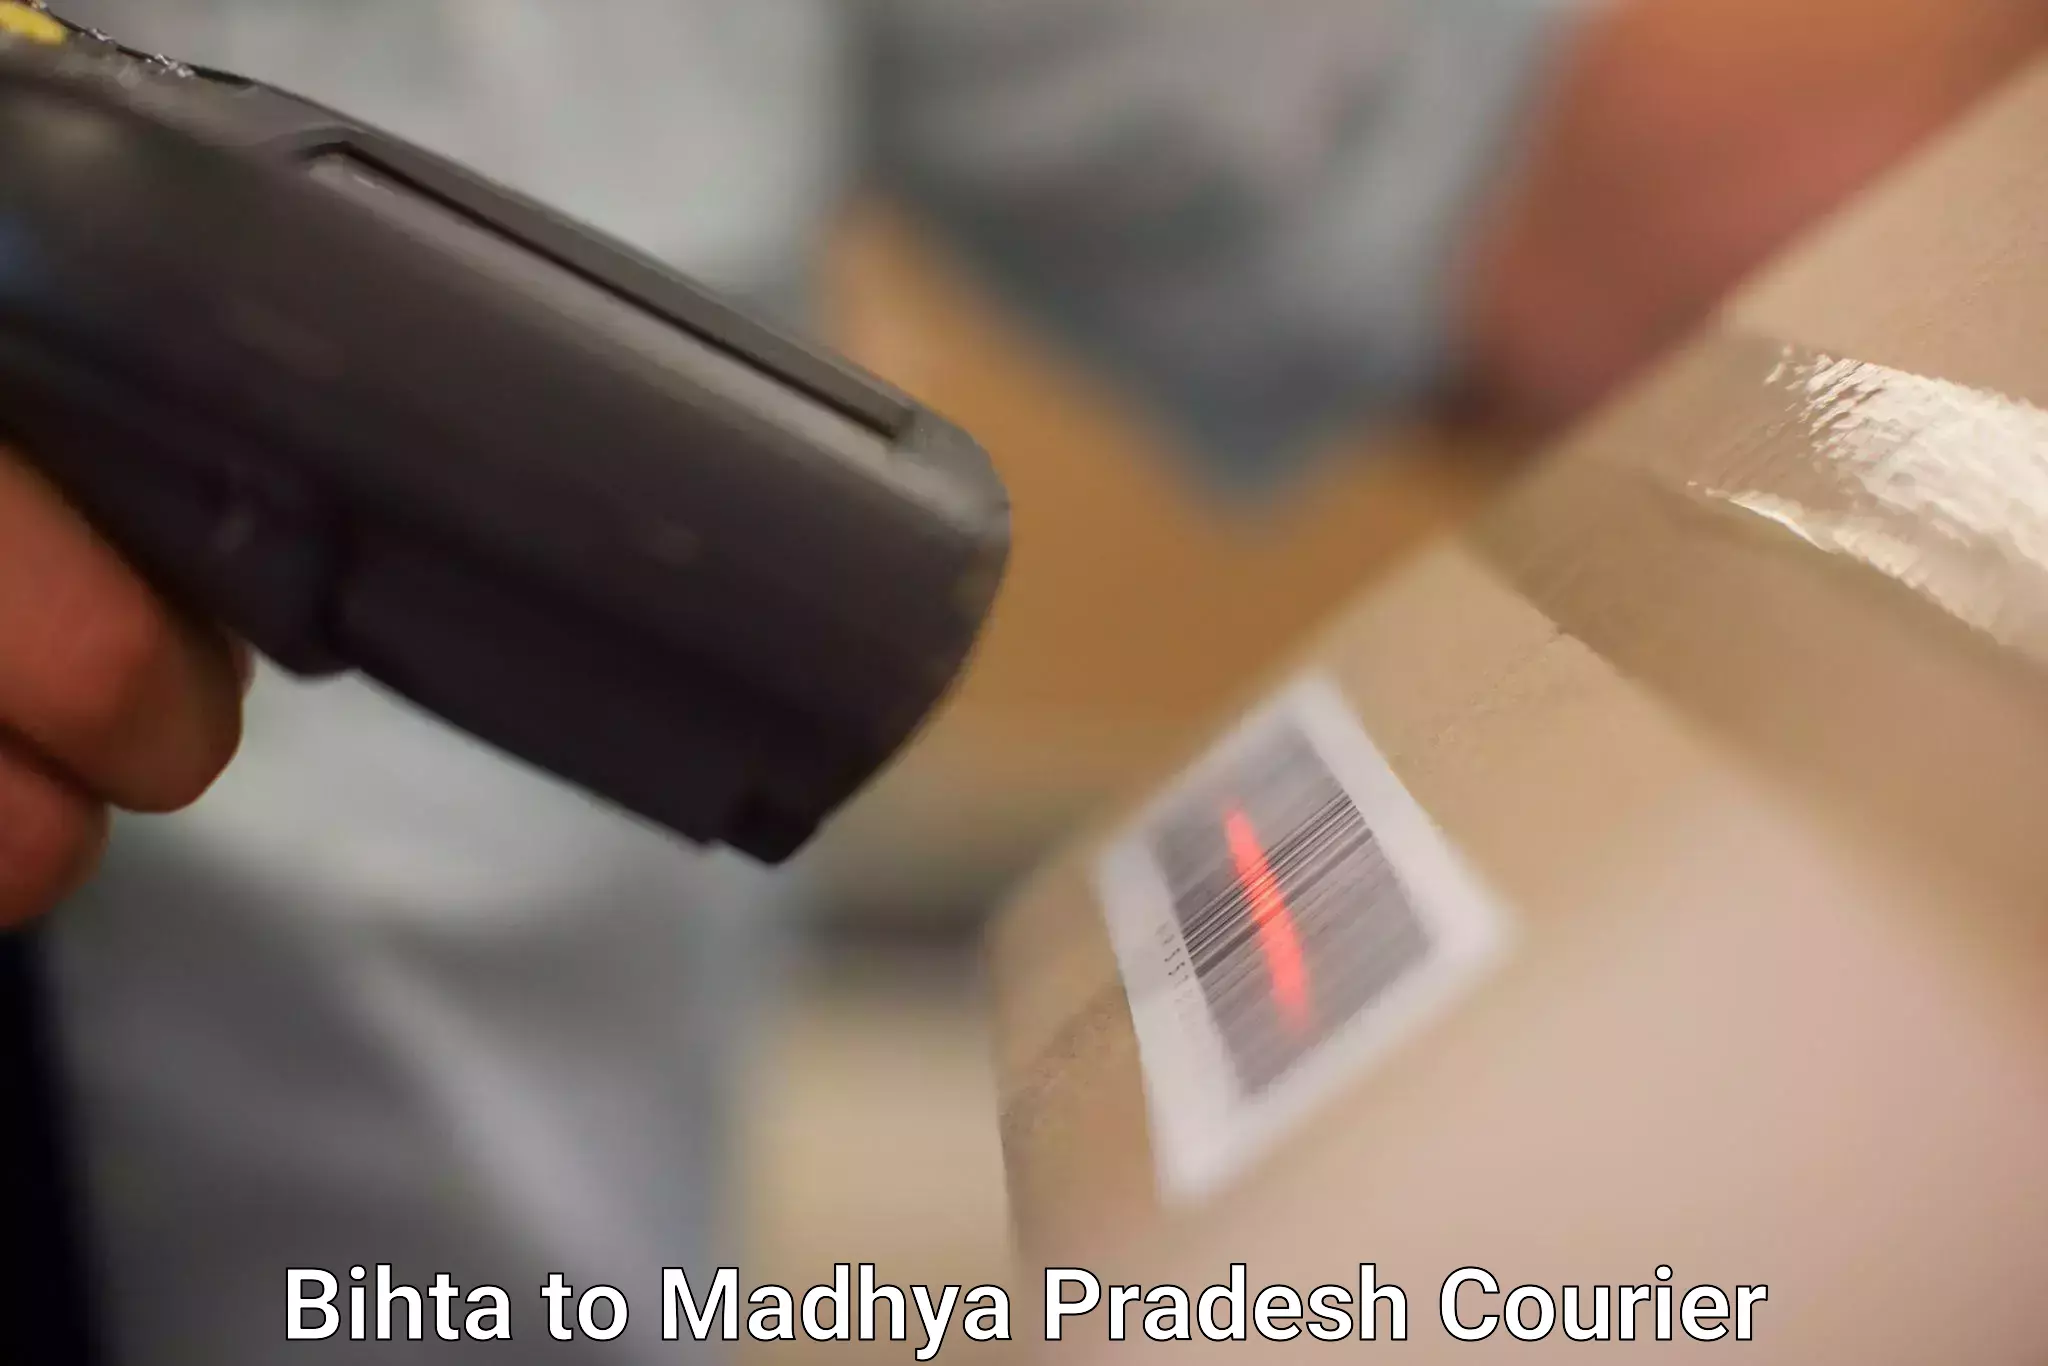 Express package handling in Bihta to Madhya Pradesh